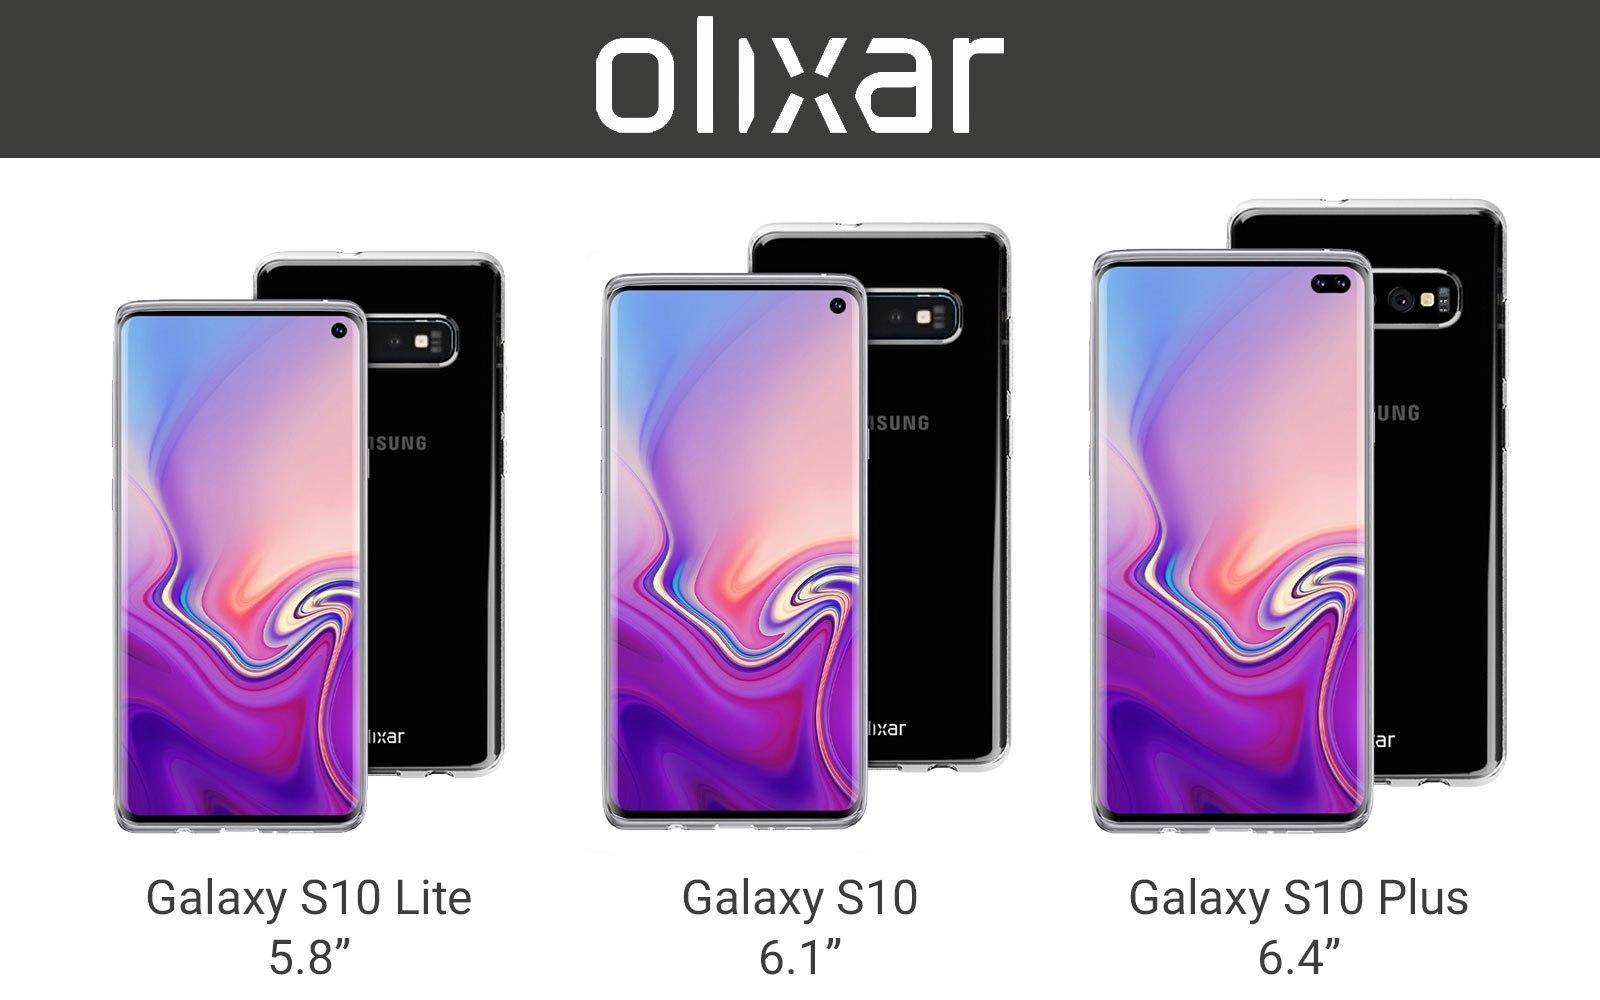 Case Maker Leaks All Three Galaxy S10 Designs